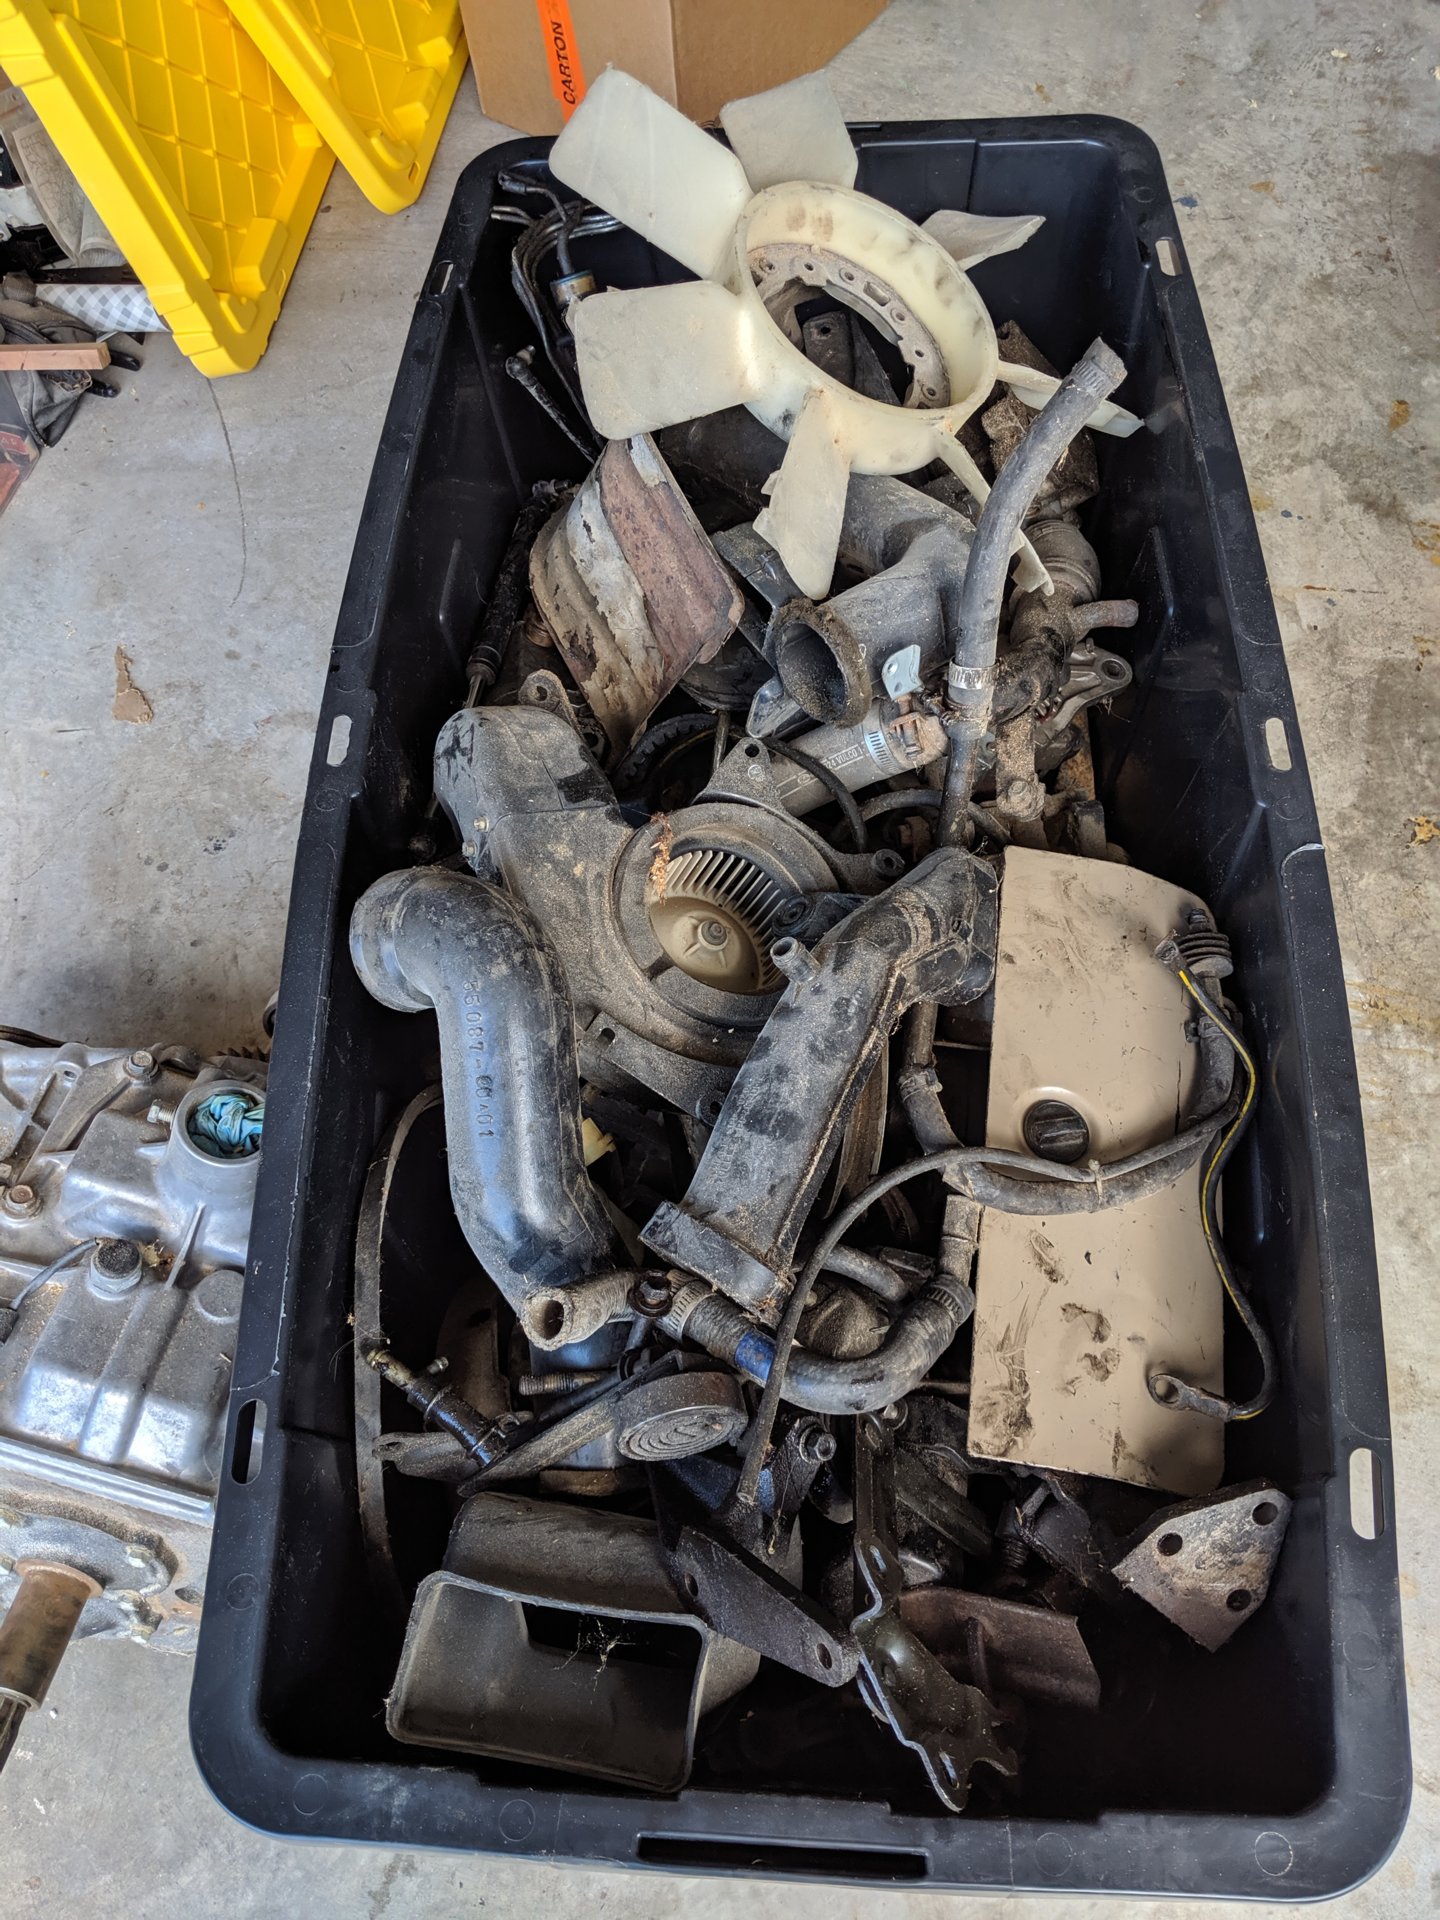 craigslist - Bin full of Fj60 parts leftover from rebuild ...